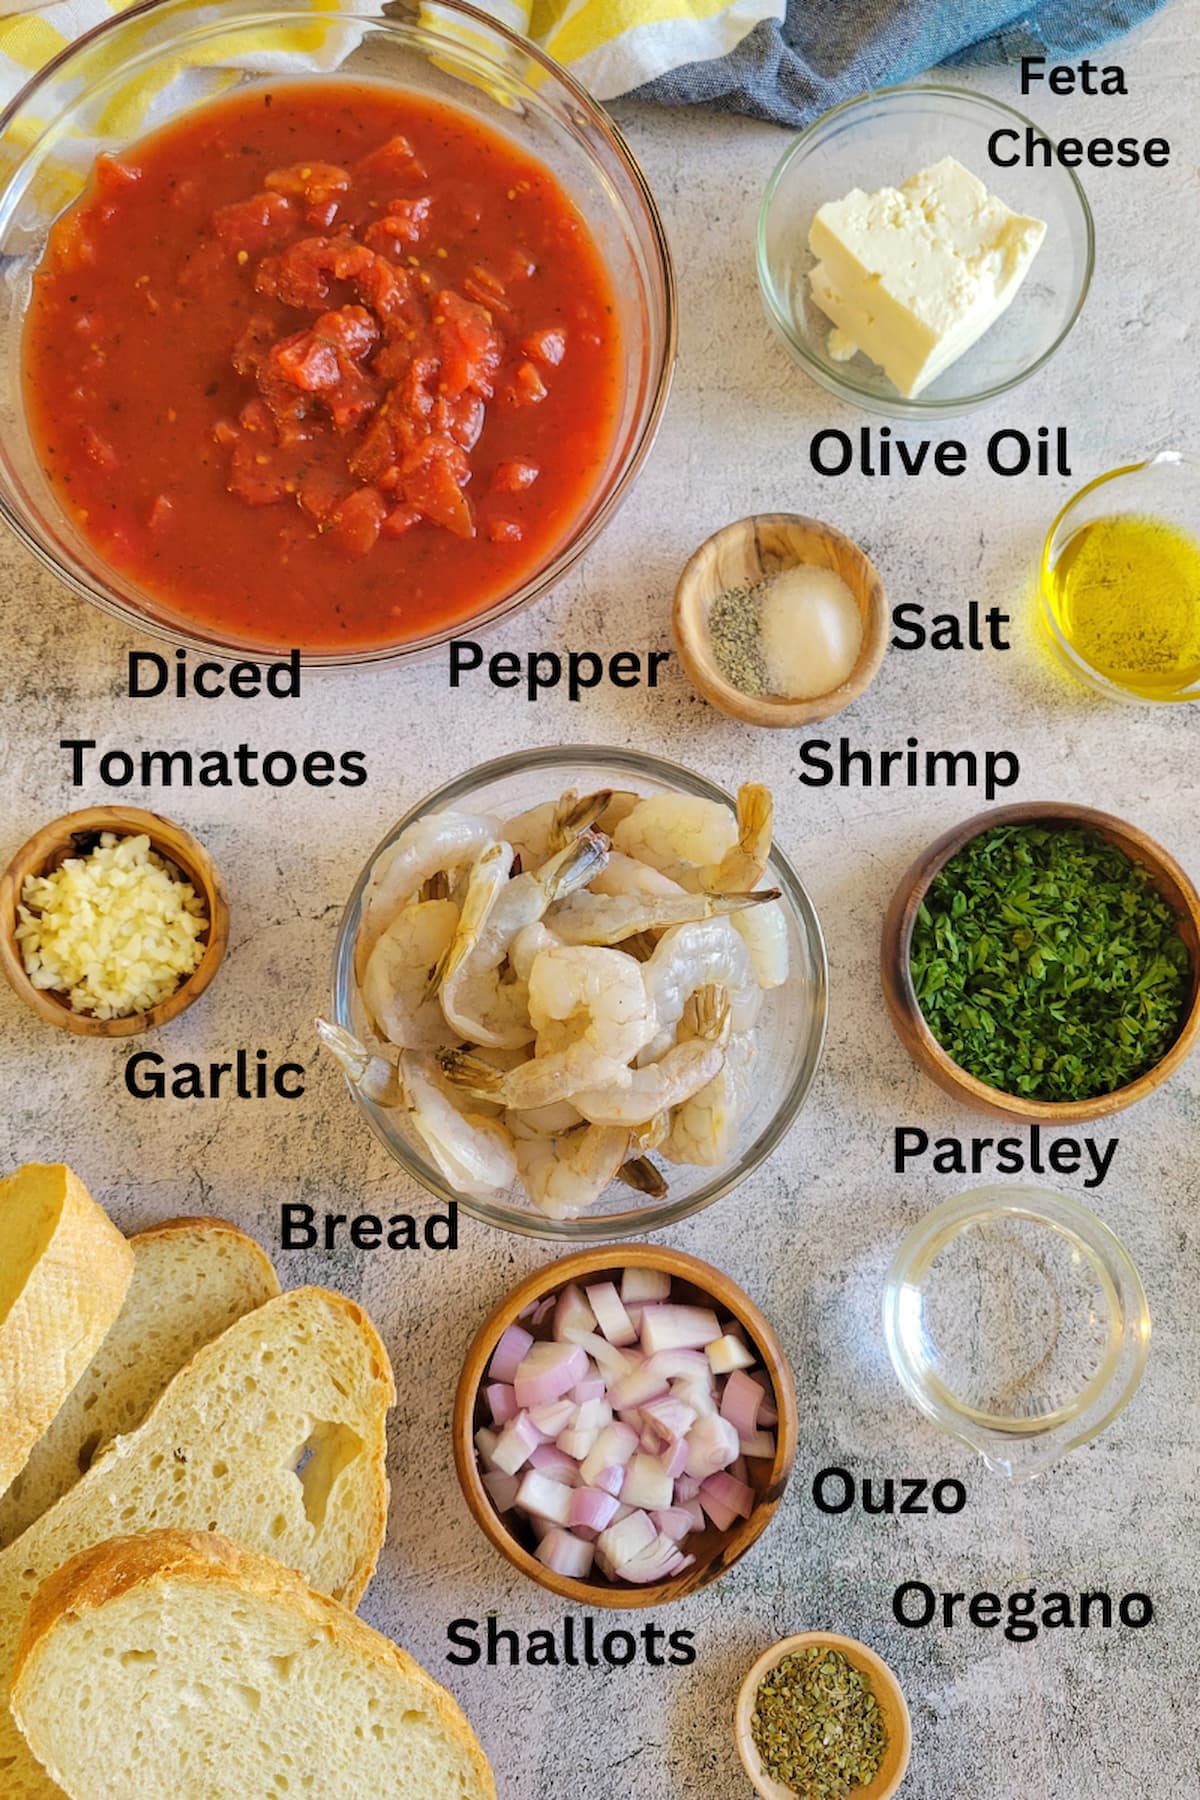 ingredients for recipe for shrimp bake - shrimp, feta, diced tomatoes, olive oil, garlic, parsley, salt, pepper, bread, oregano, ouzo, shallots